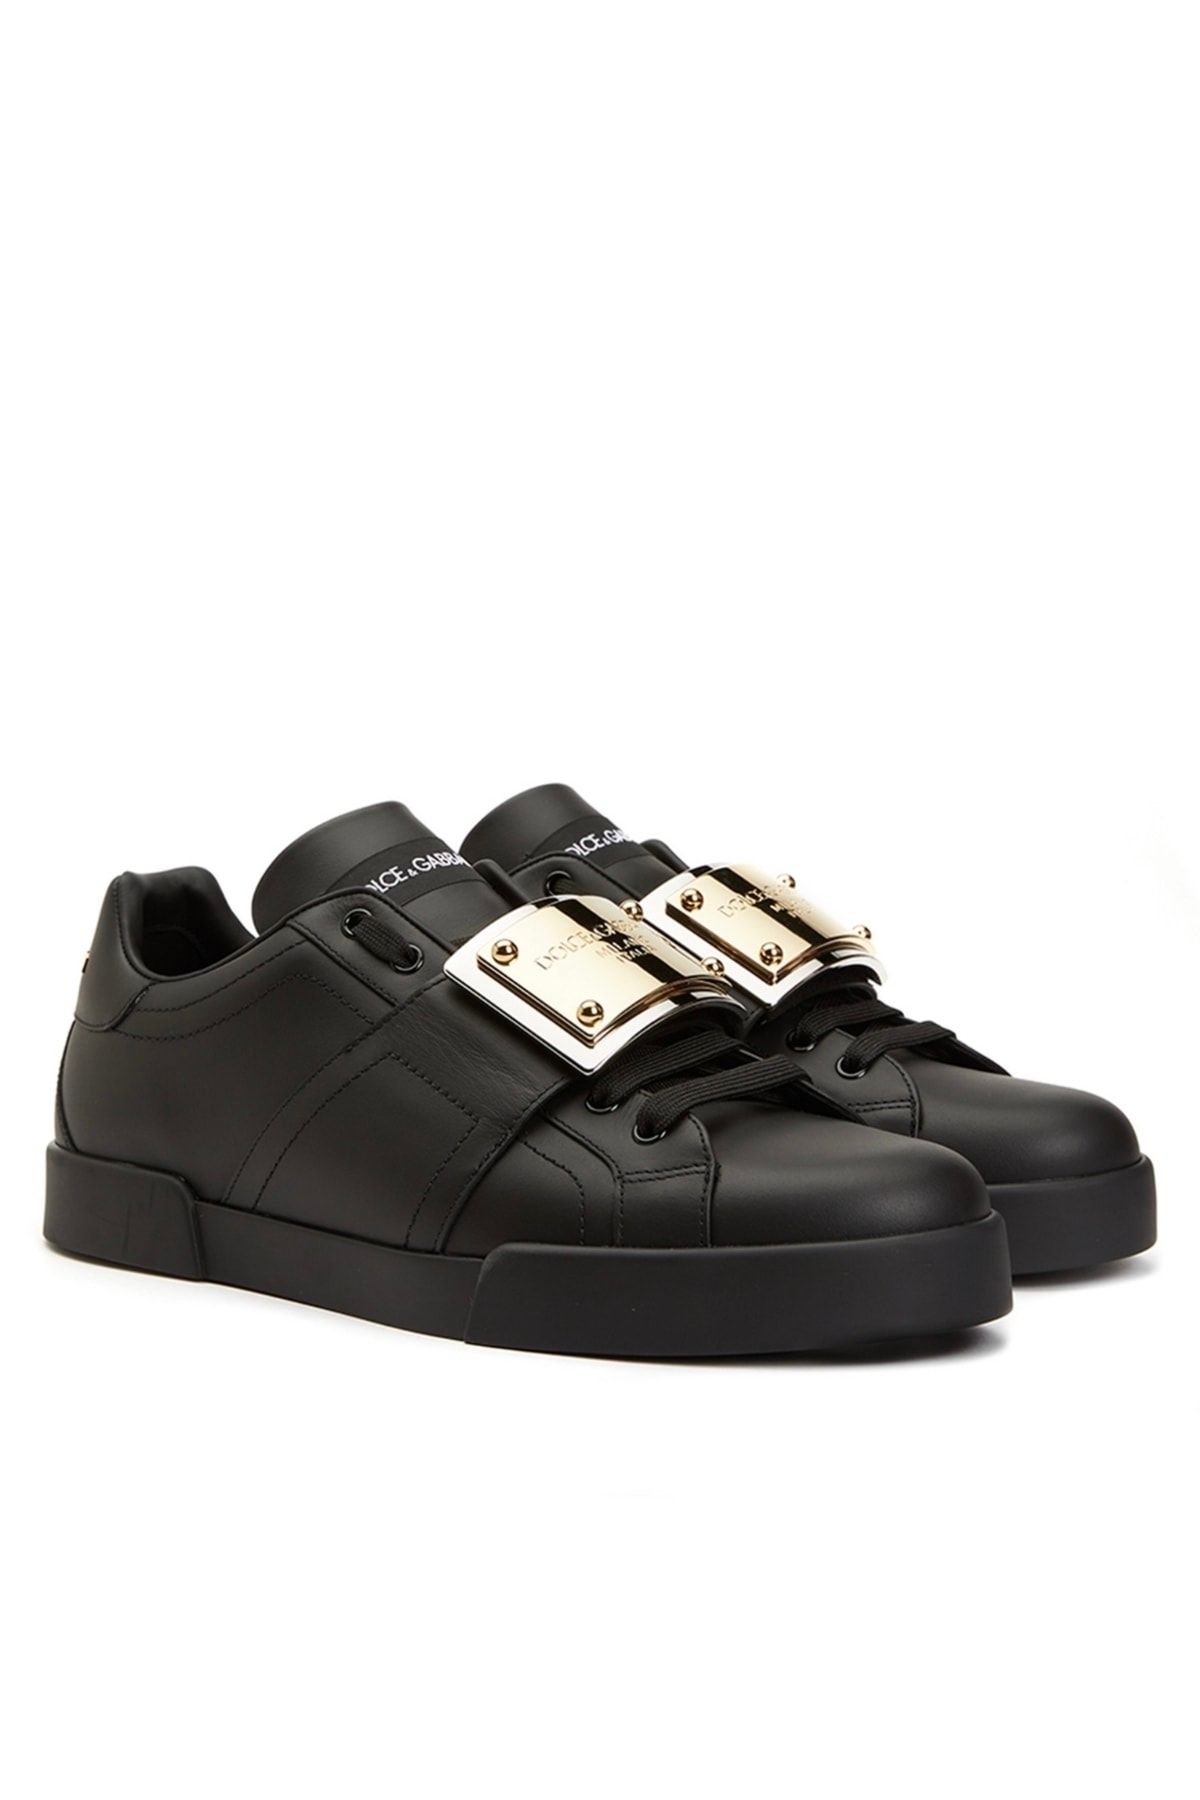 Dolce&Gabbana Portofino Low-top Sneakers